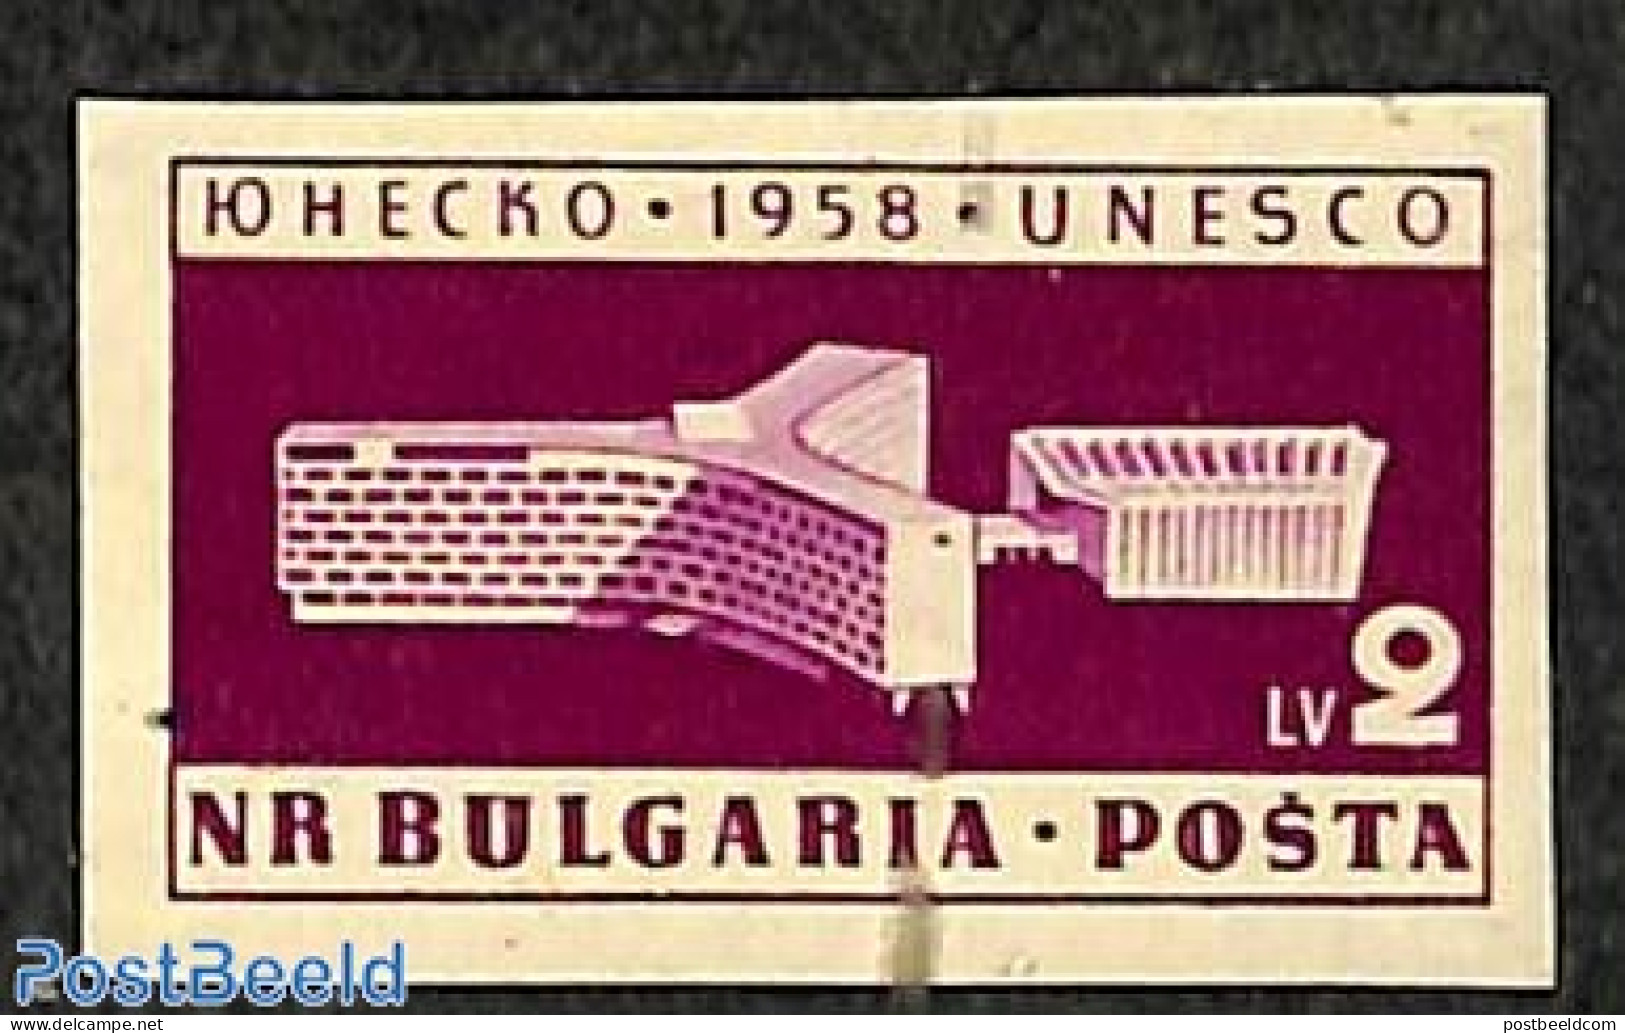 Bulgaria 1959 UNESCO 1v Imperforated, Mint NH, History - Unesco - Neufs